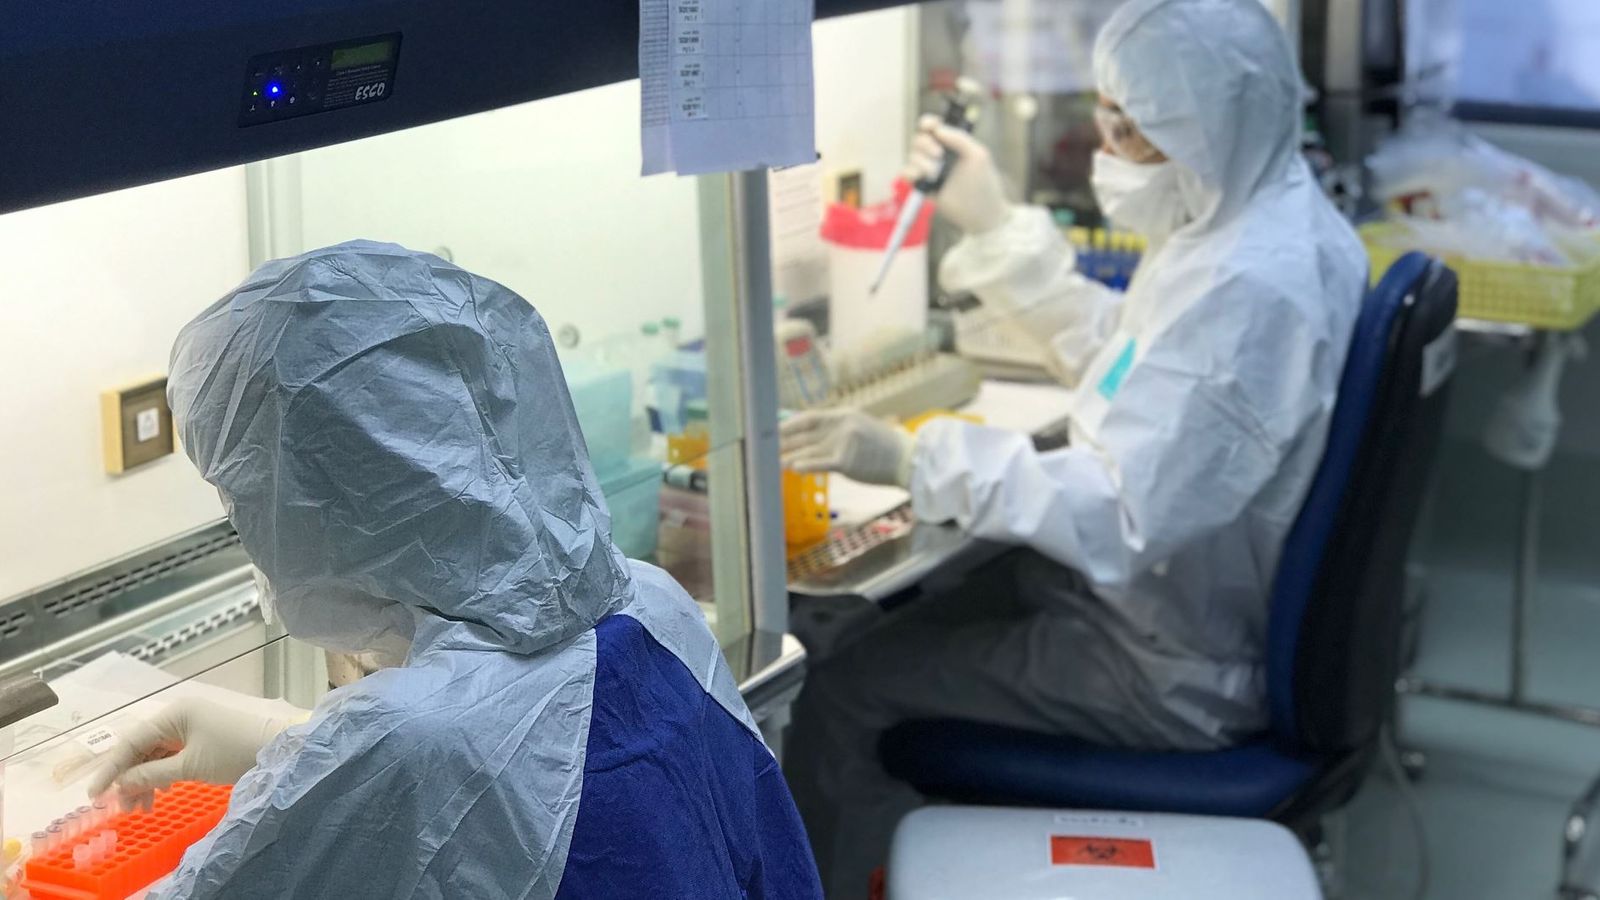 Coronavirus: Meet the ’’’’virus hunters’’’’ working 24/7 in the fight against the outbreak